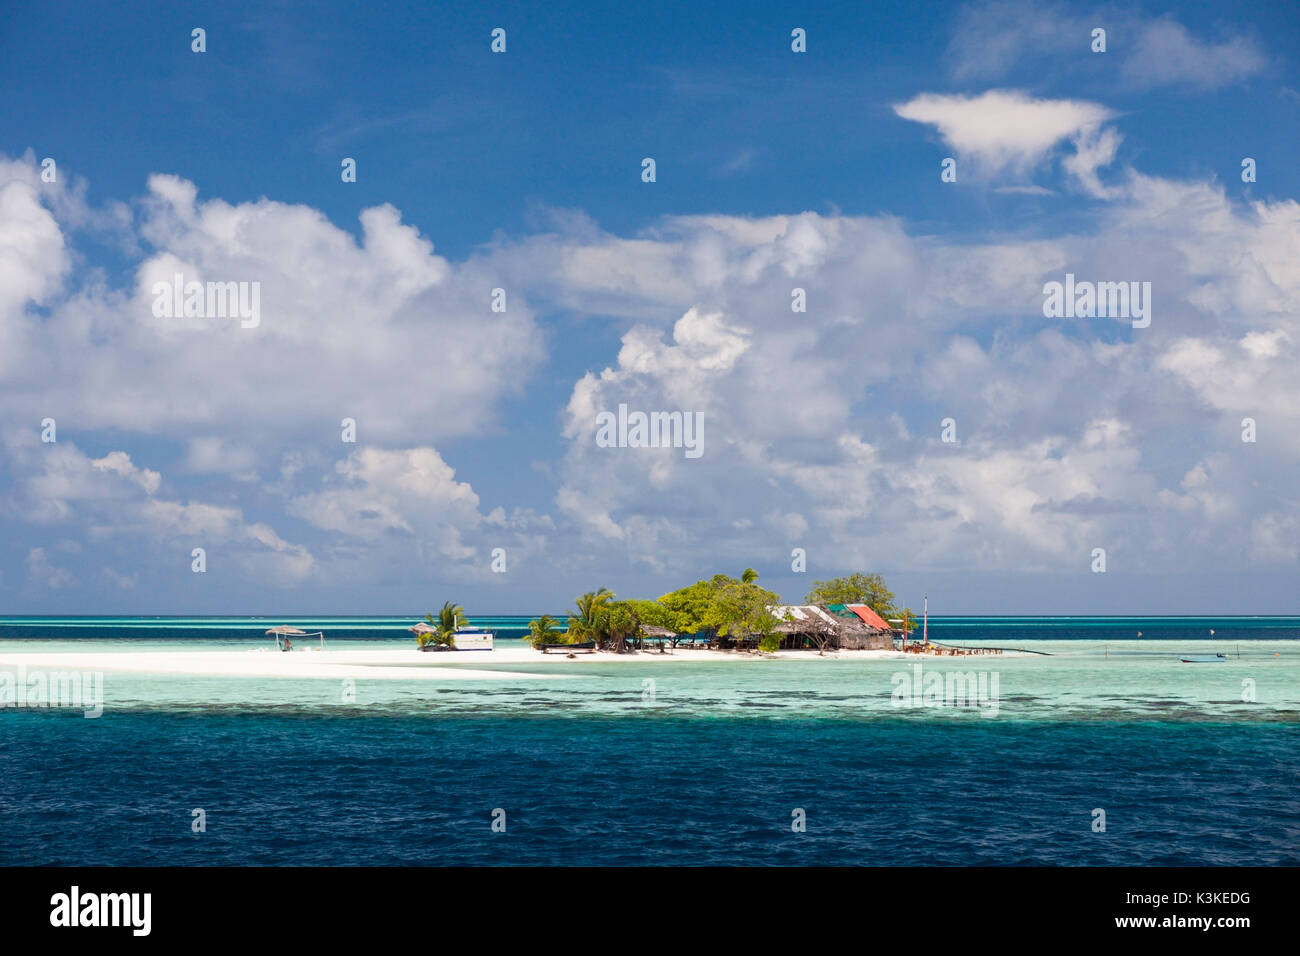 Picnic Island Vashugiri, Felidhu Atoll, Maldives Stock Photo